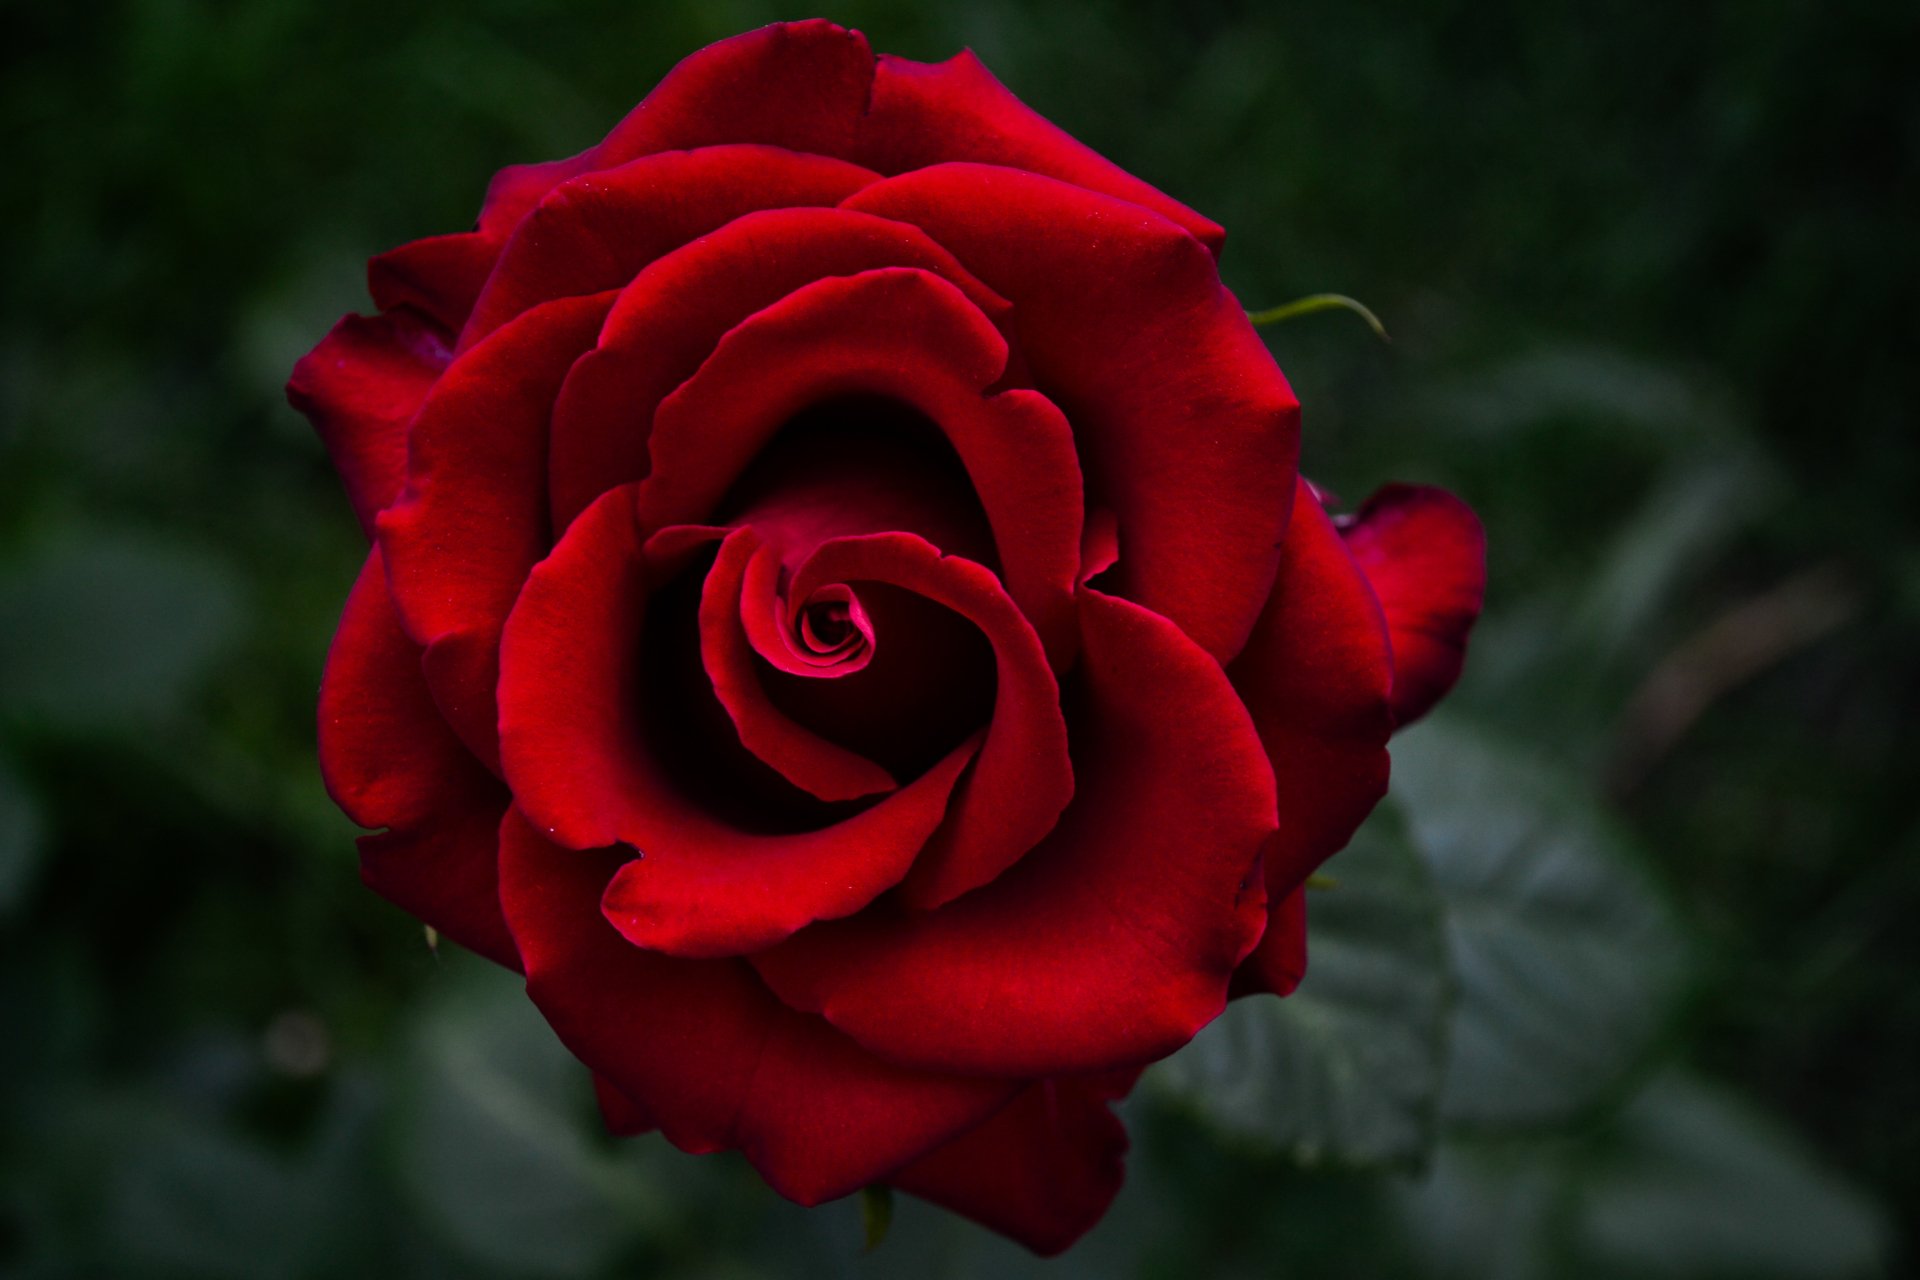 Red rose onlyfan